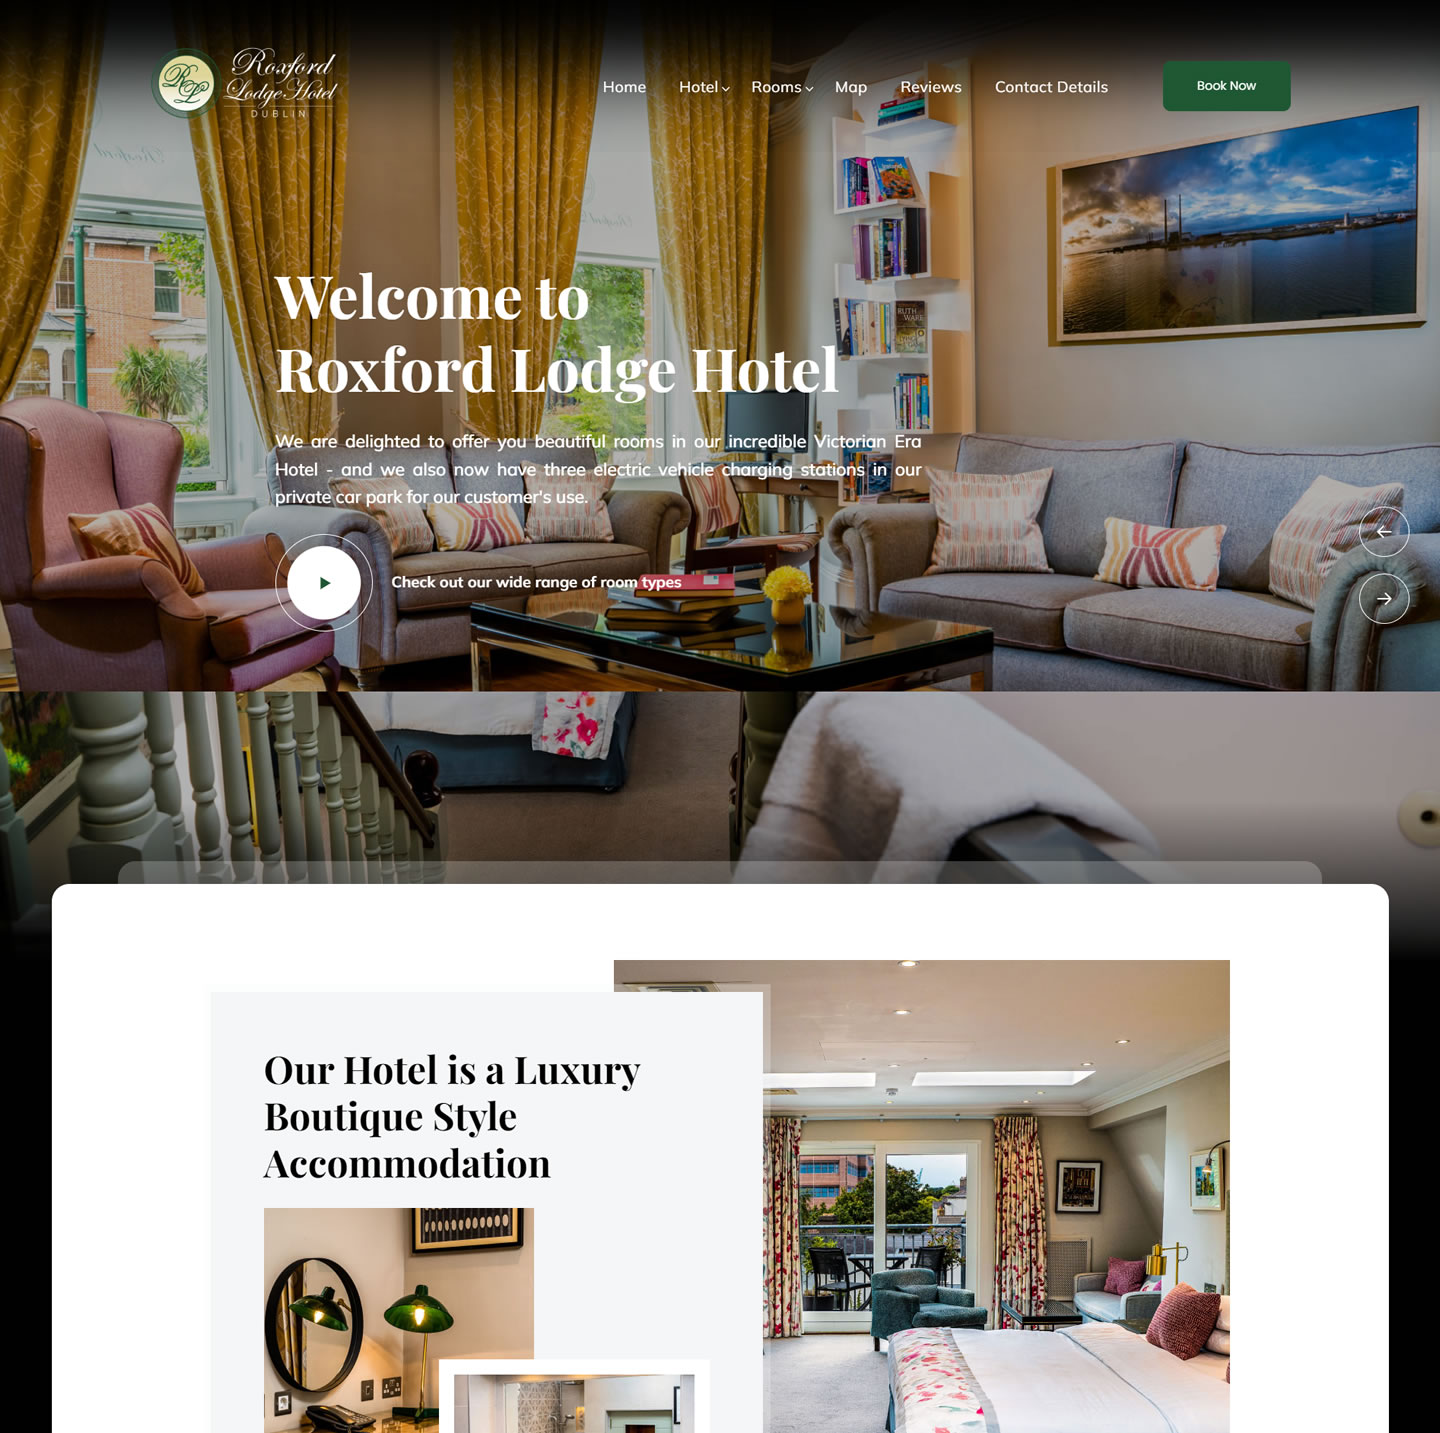 Roxford Lodge Hotel - new website design and site management/hosting